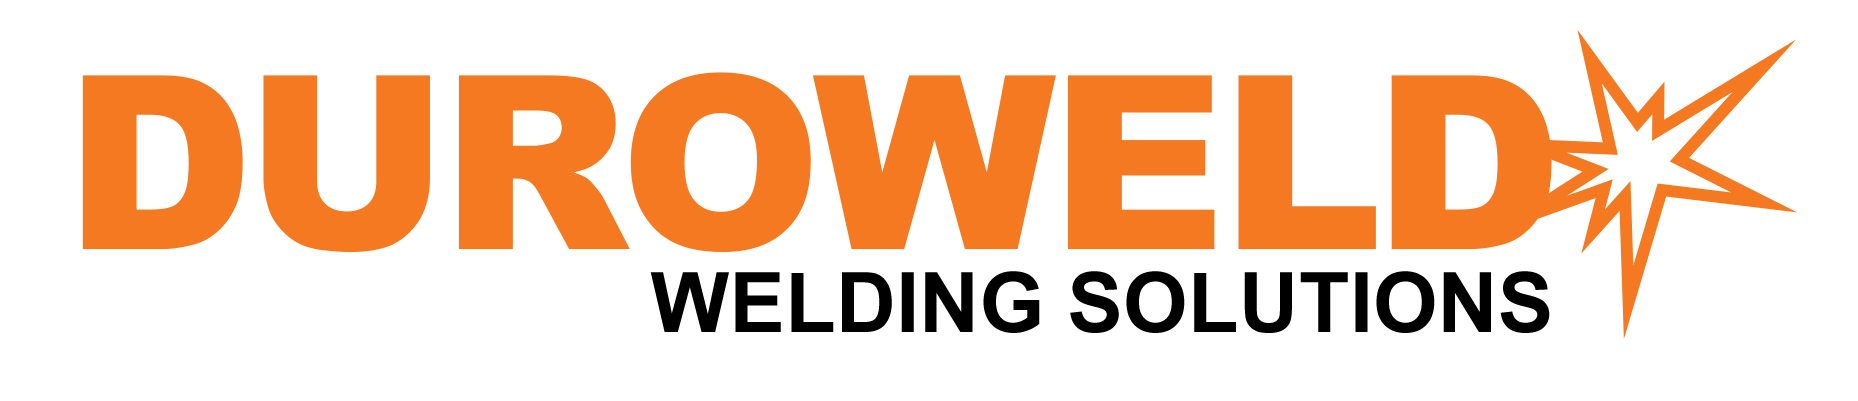 Duroweld logo 002